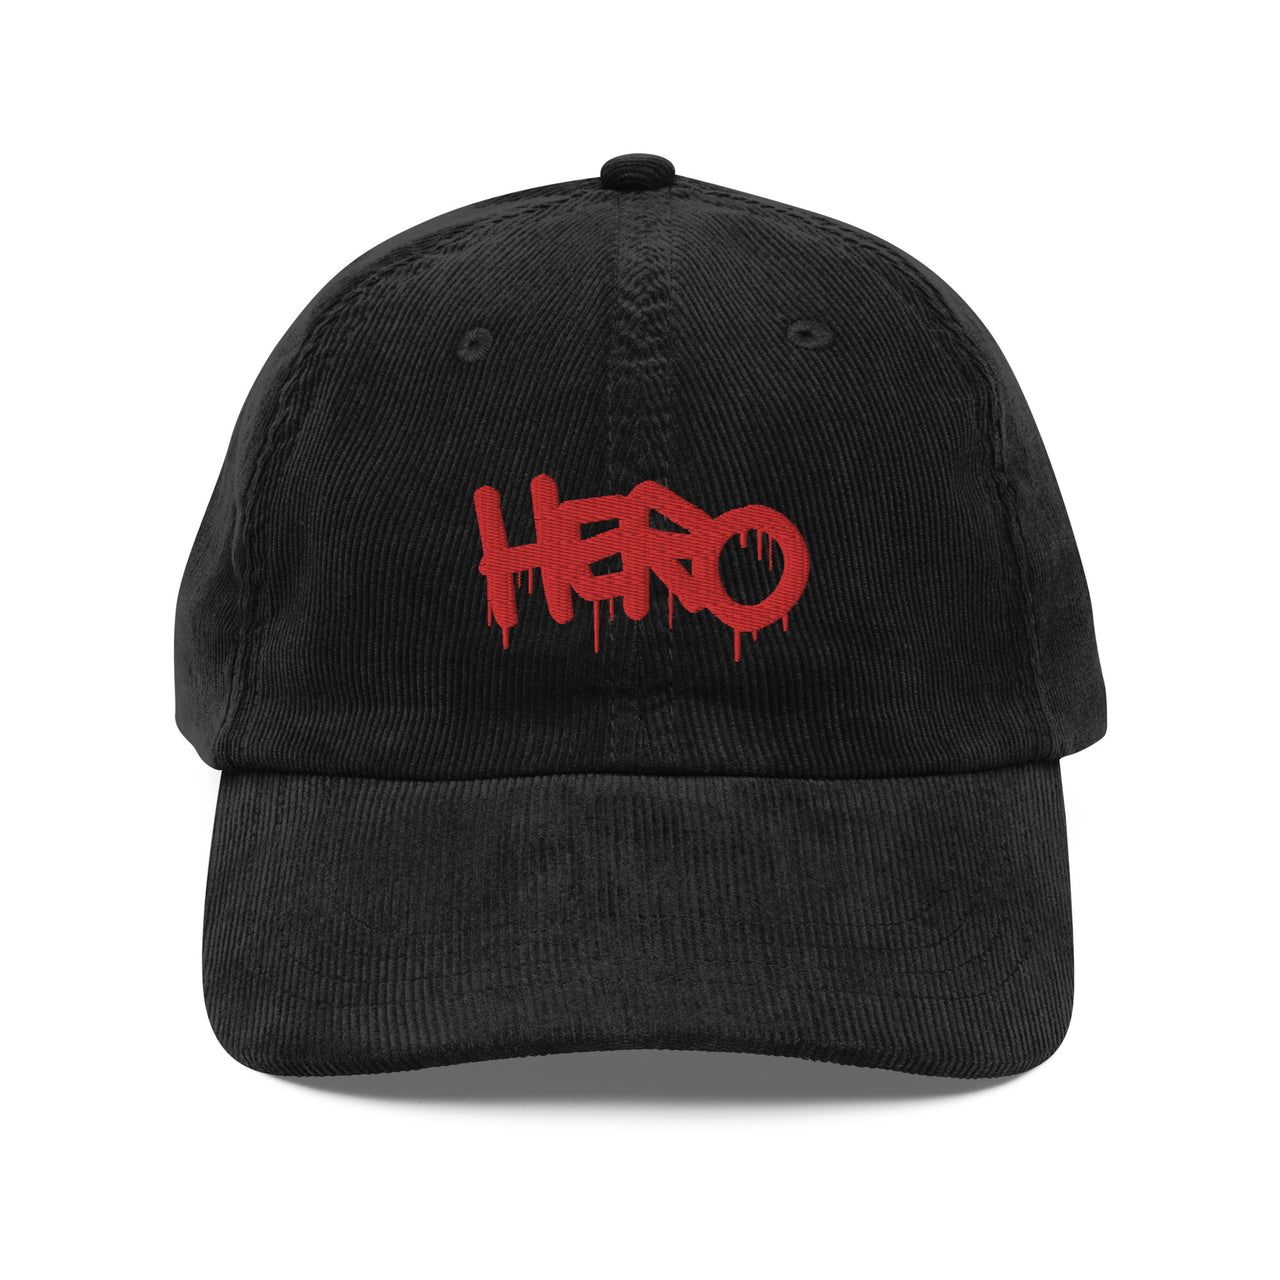 HERO - Vintage corduroy cap - Design Hero